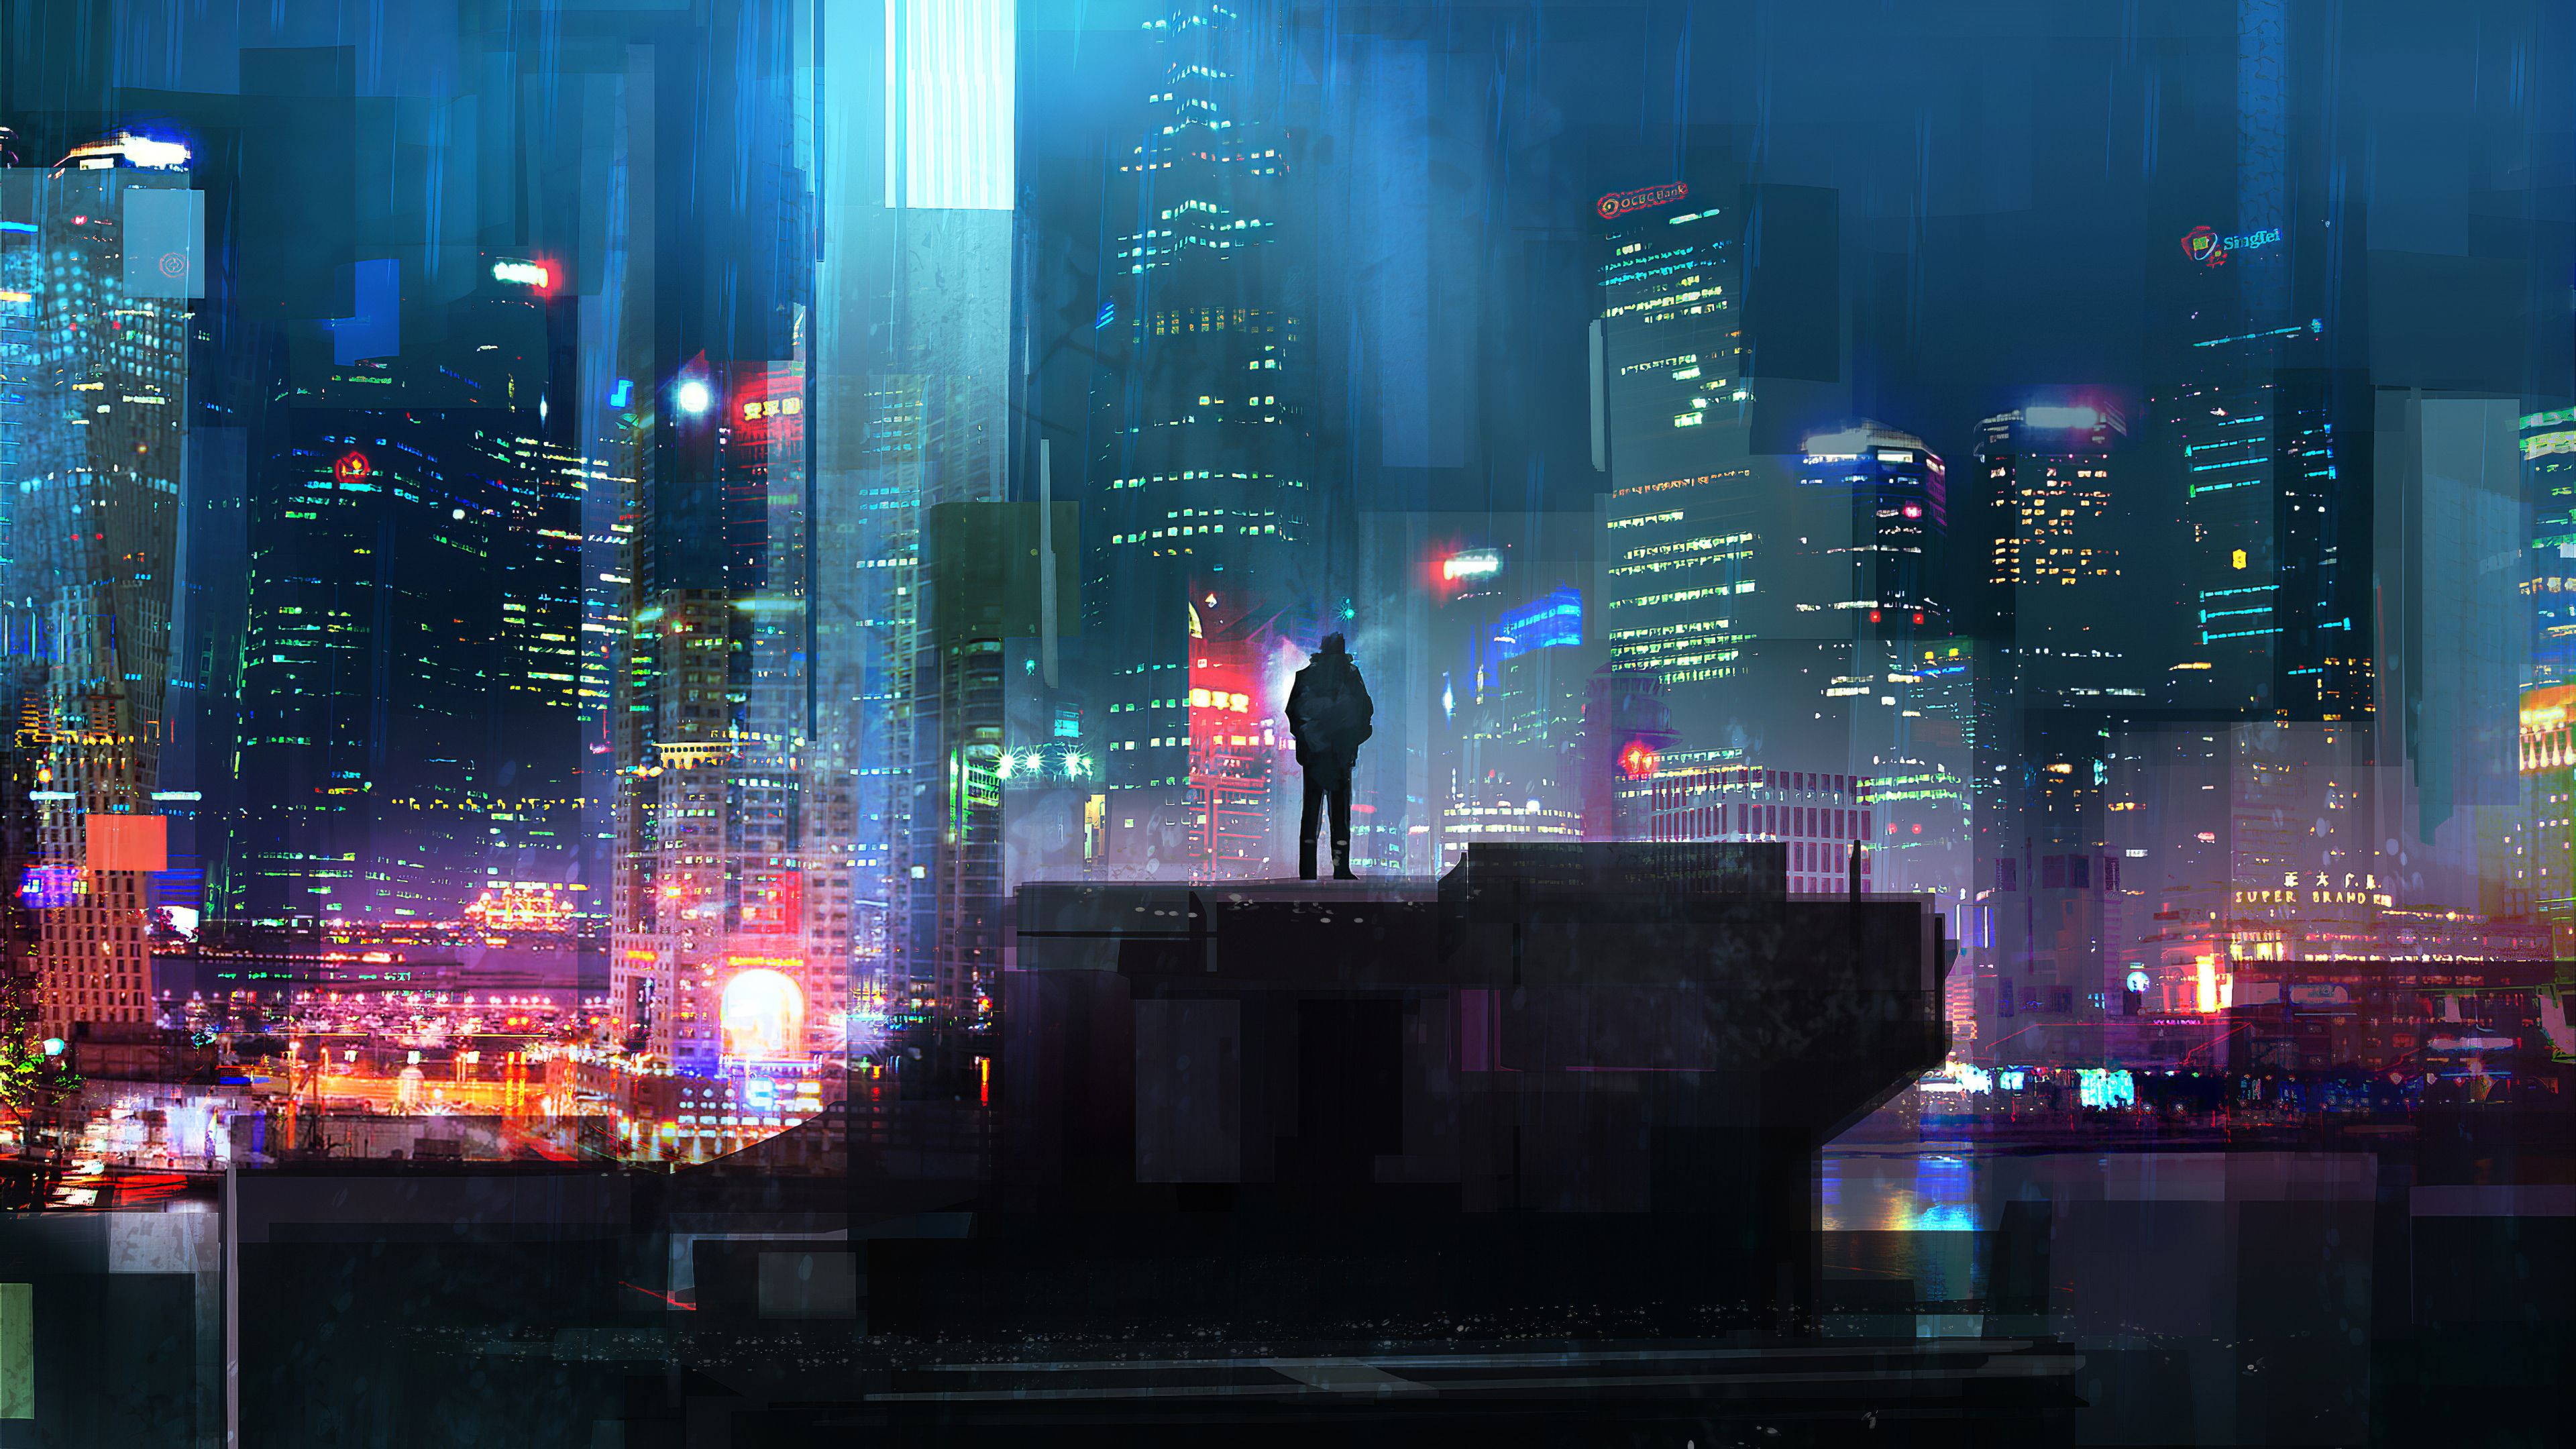 Alone Cyberpunk Boy in City Wallpaper, HD Artist 4K Wallpaper, Image, Photo and Background